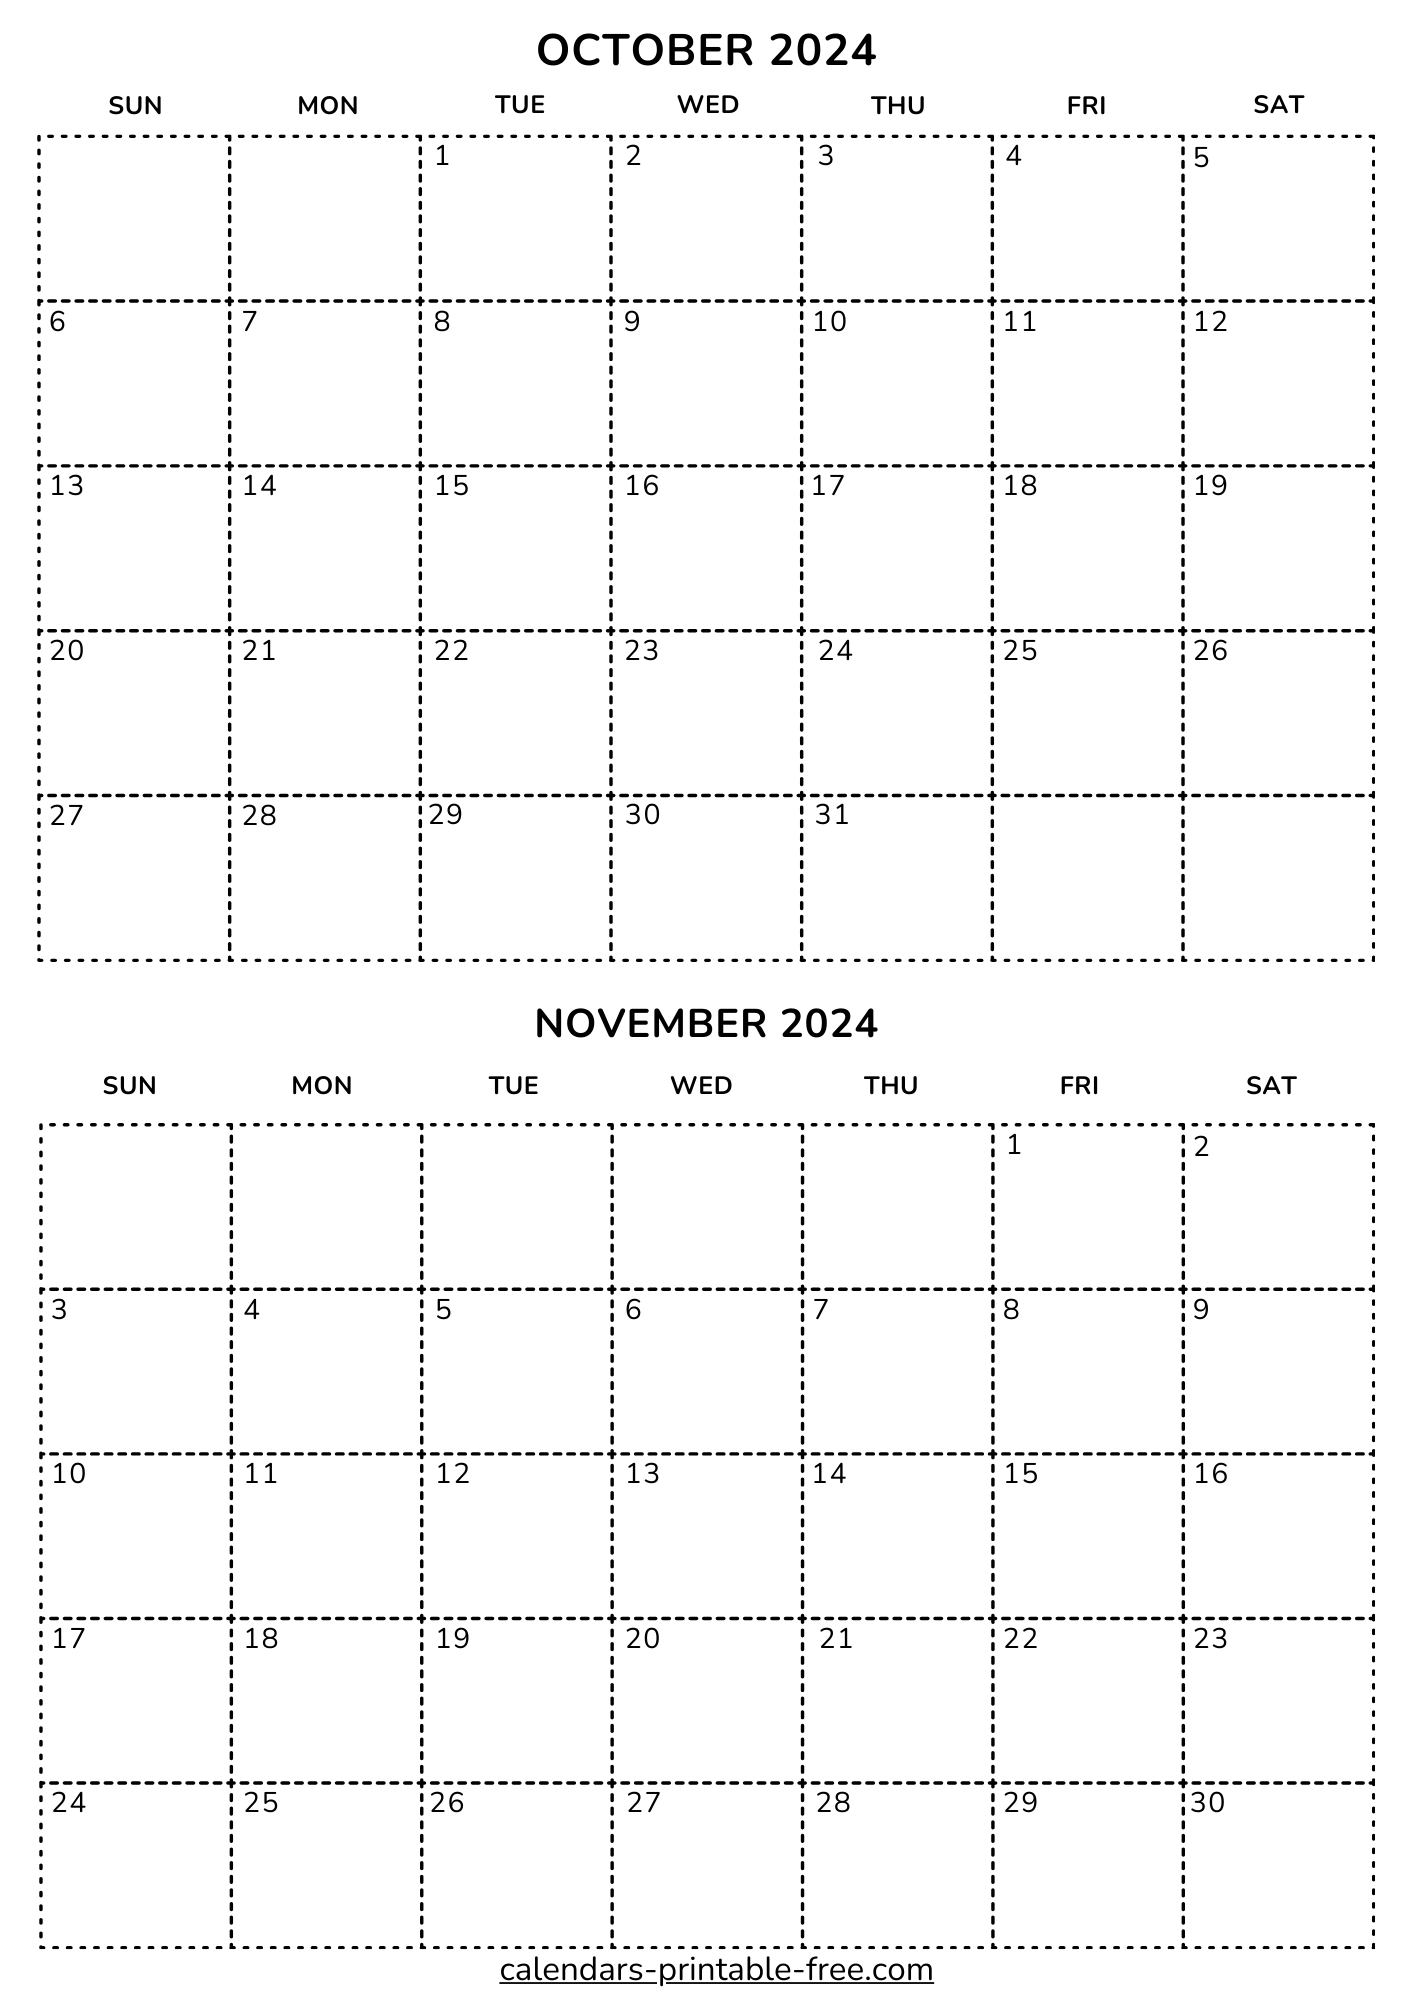 October and November 2024 Calendar Printable Free, image